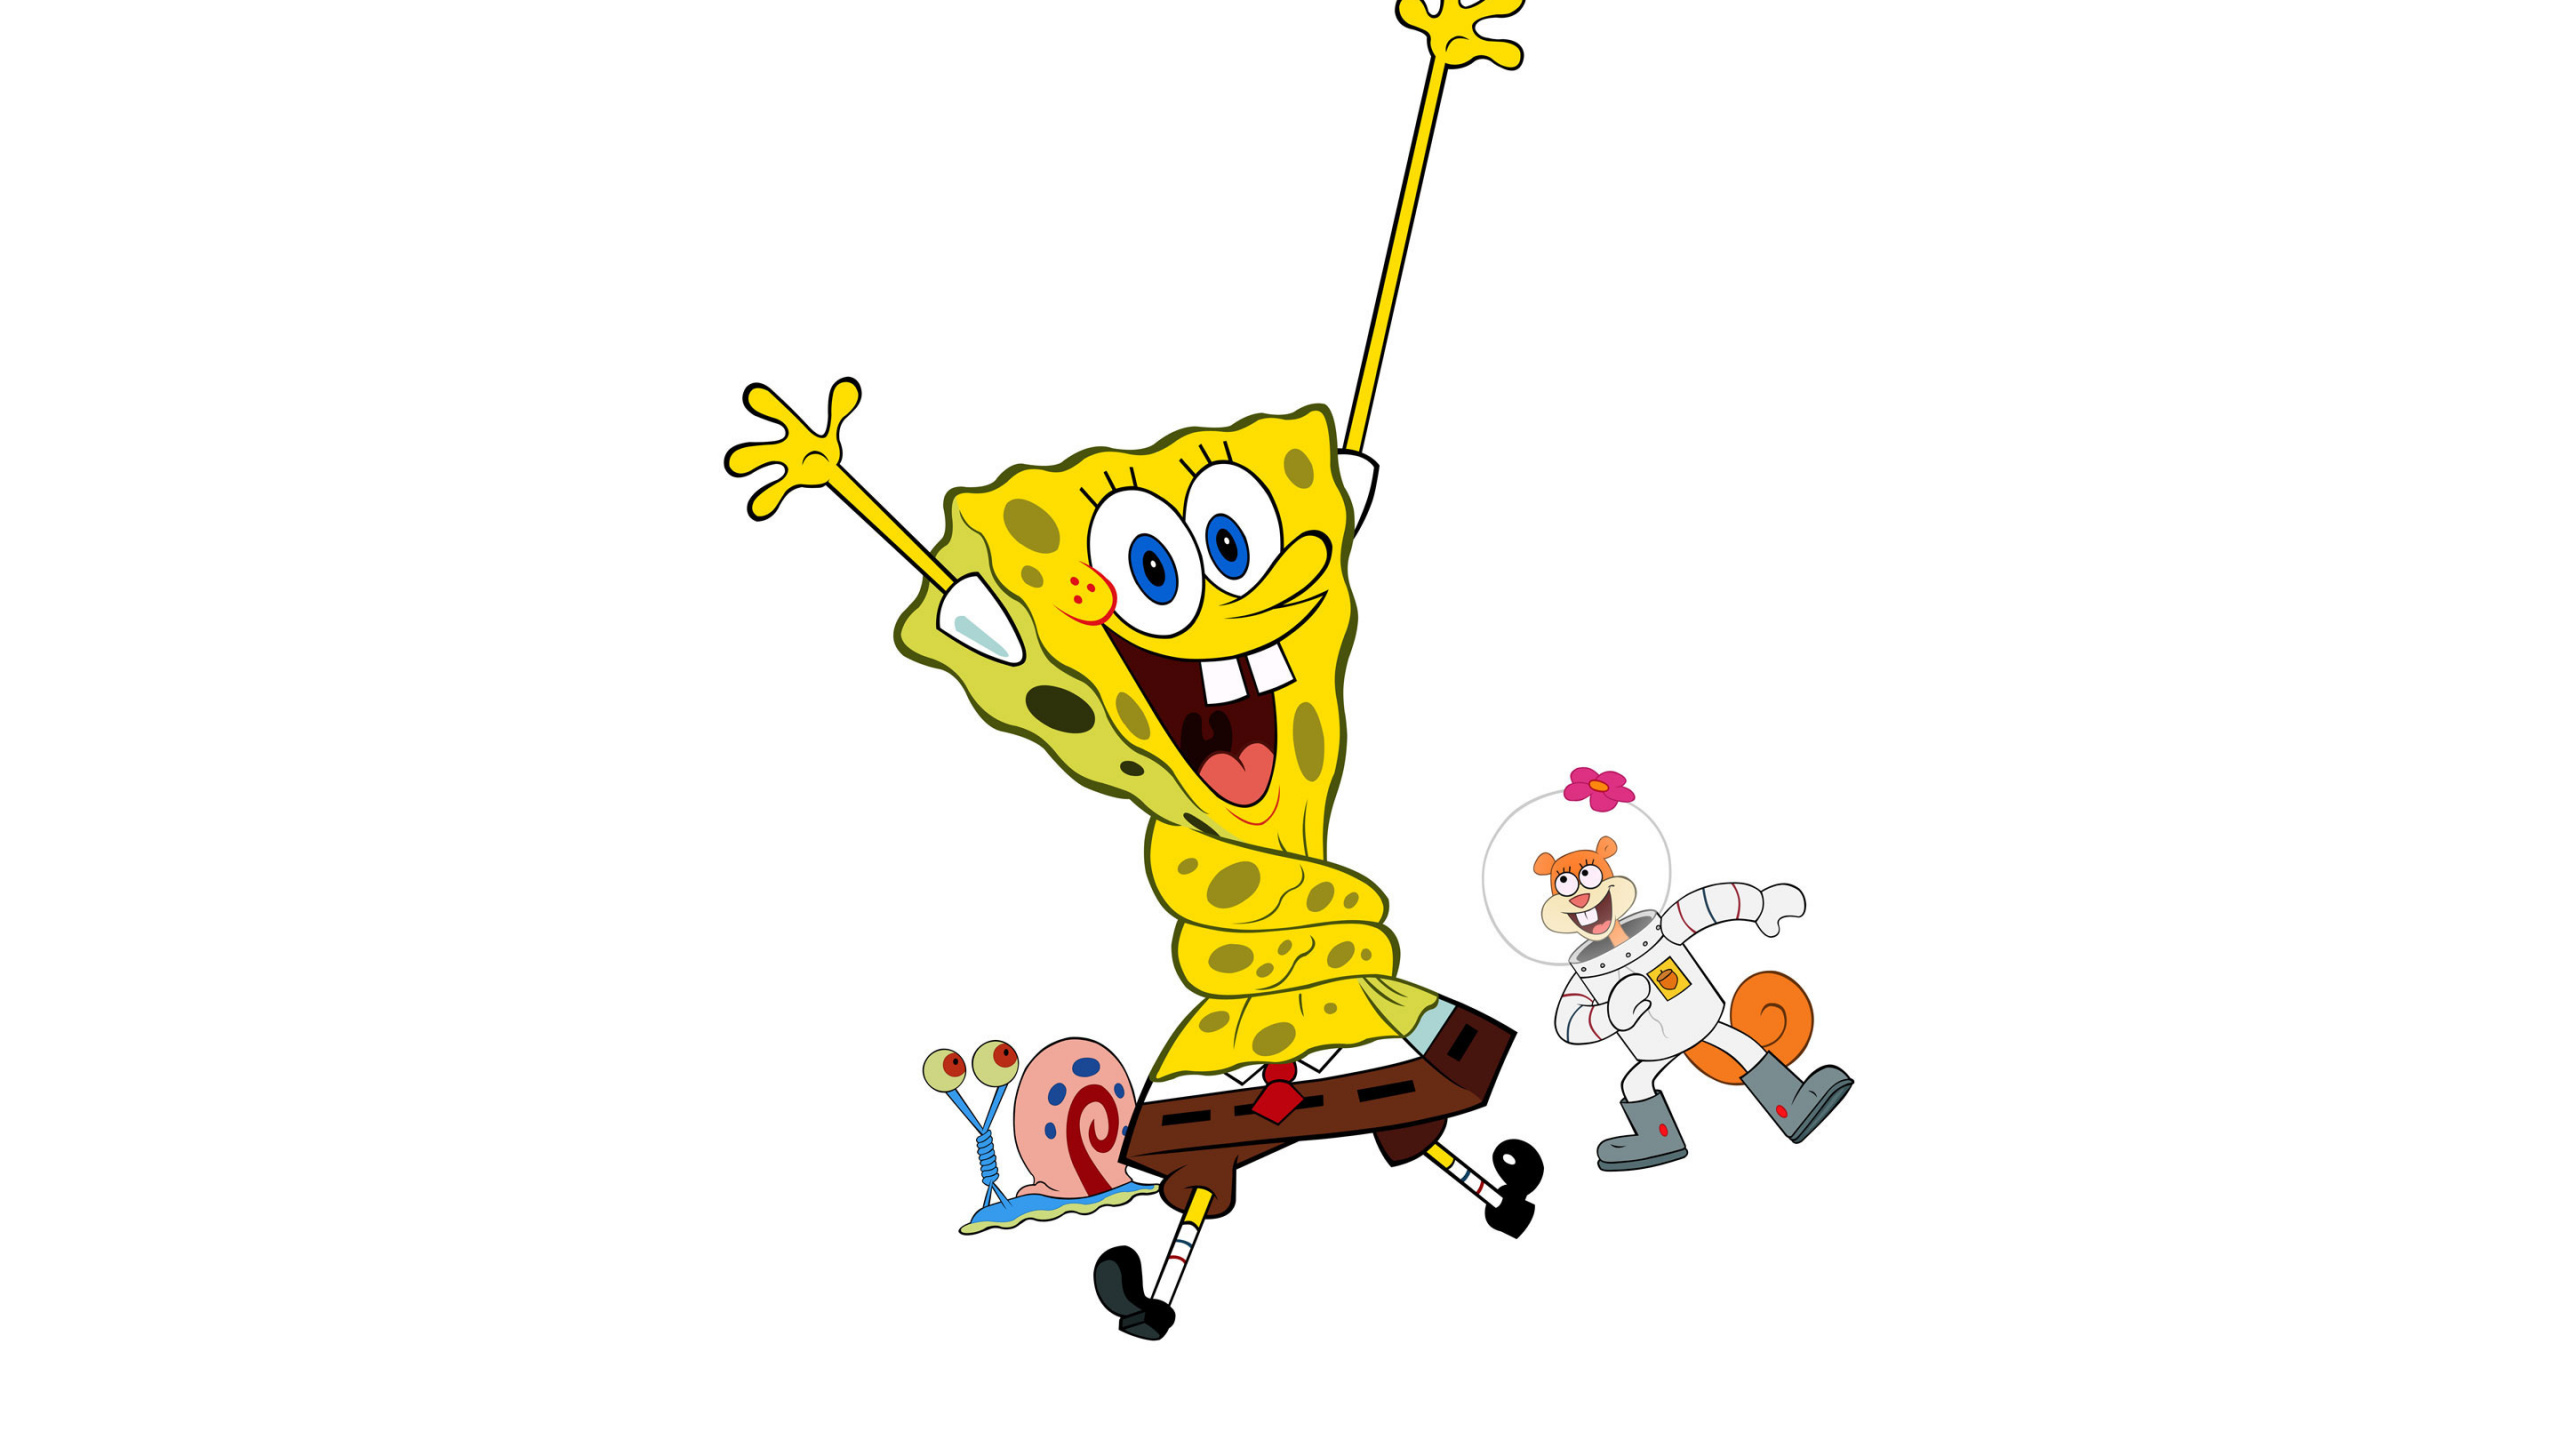 Spongebob Squarepants Holding Stick Illustration. Wallpaper in 2560x1440 Resolution